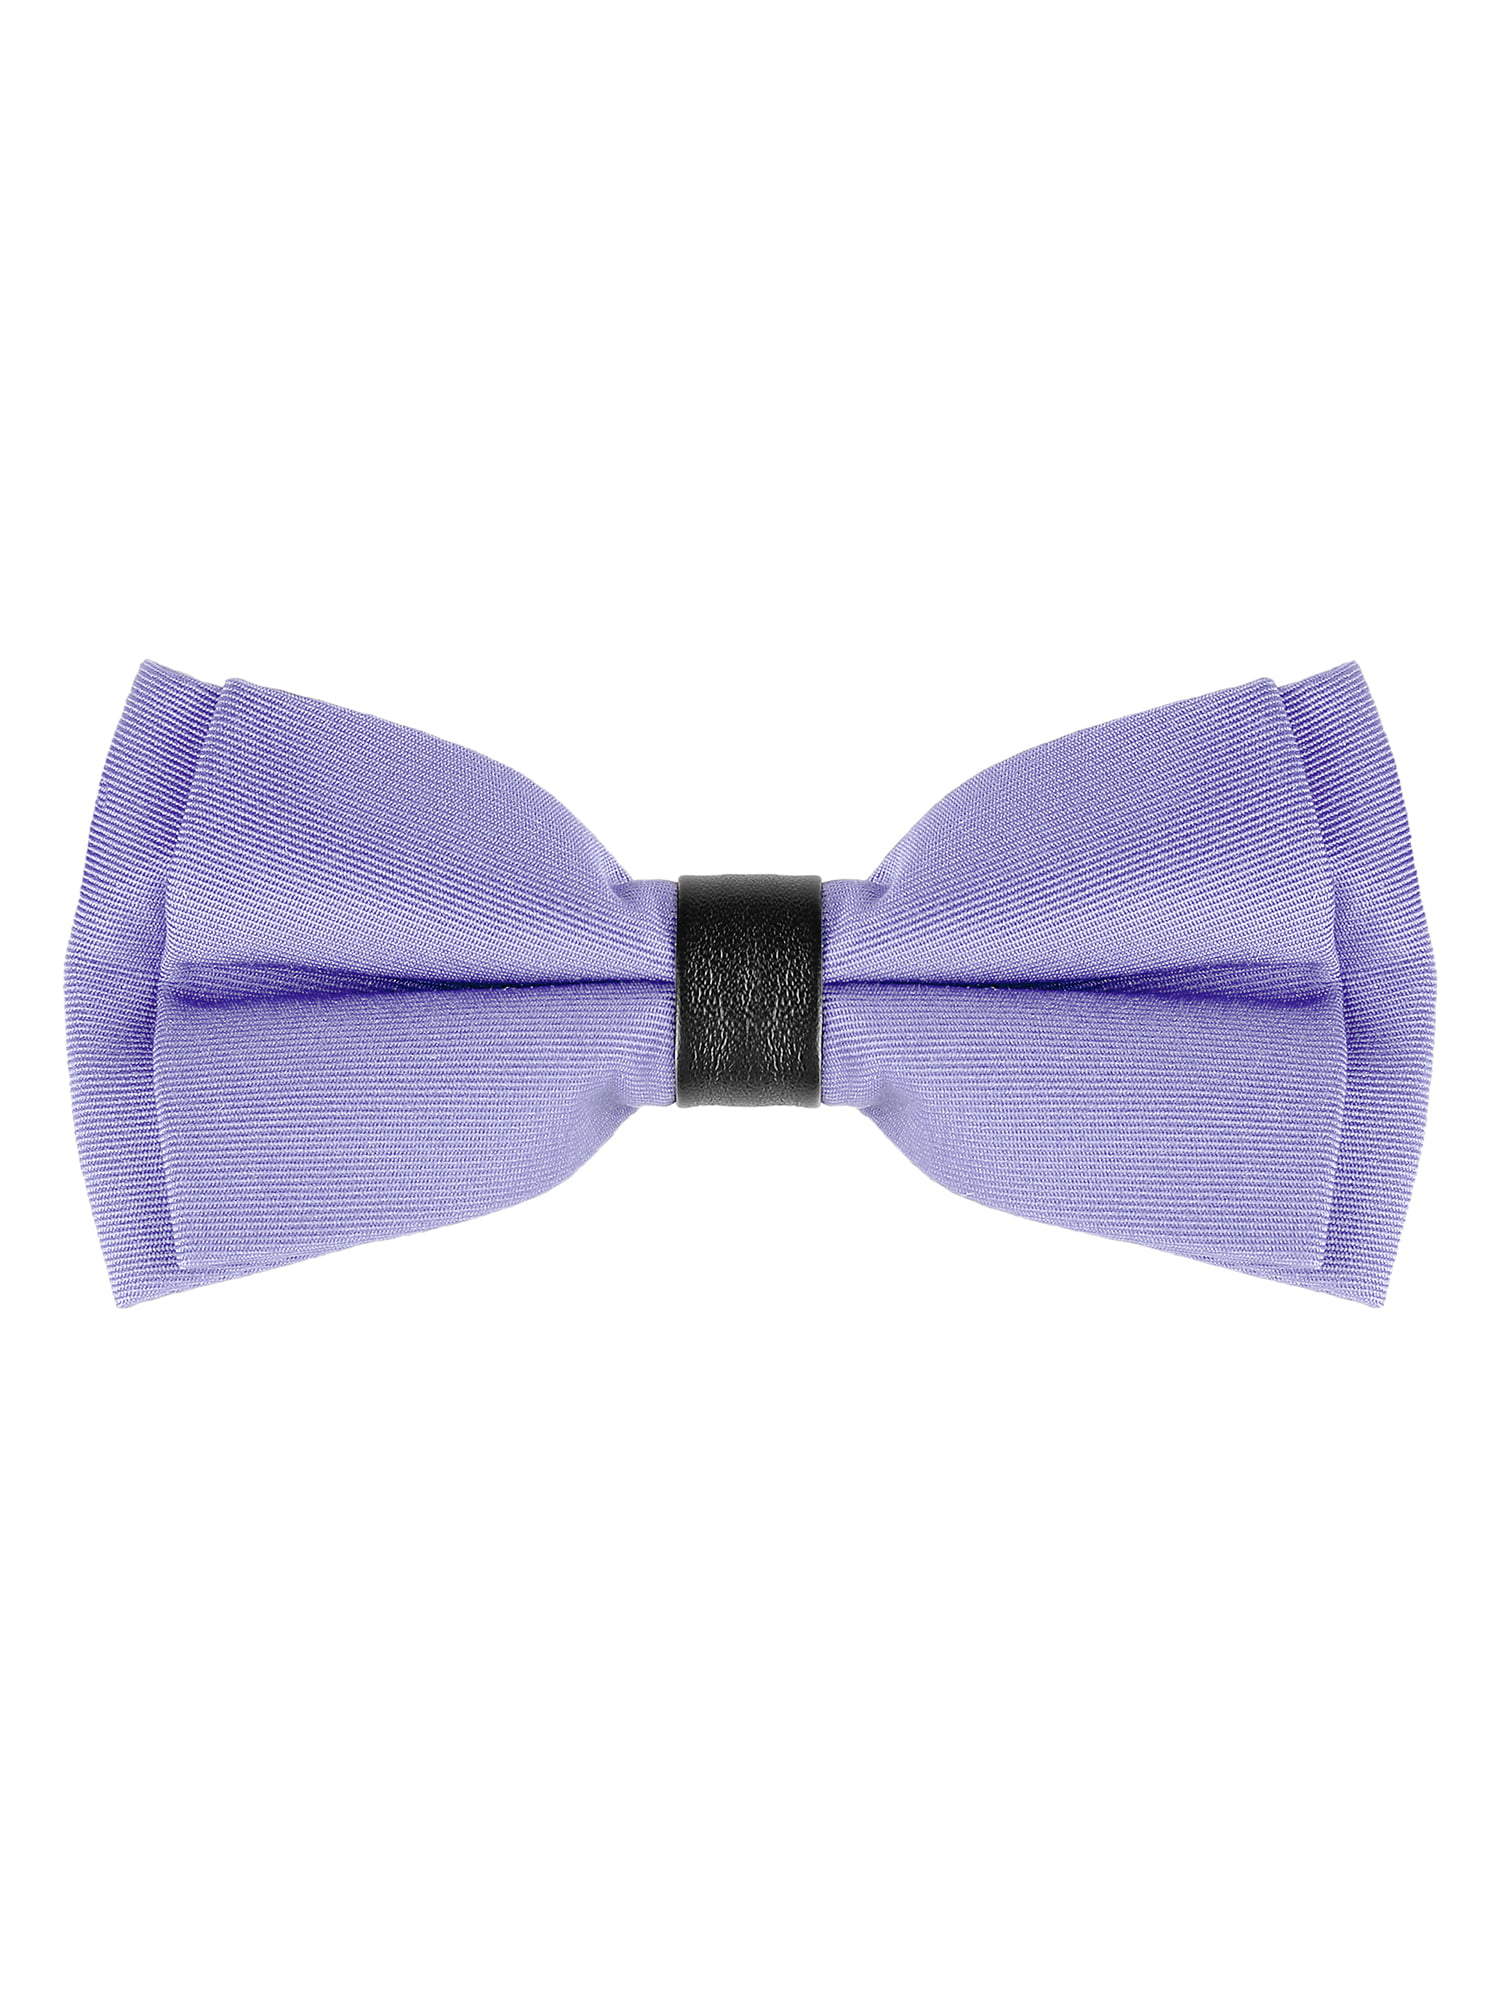 Men's Pre-tied Bow Tie & hankie set plaids & checker purple silver gray formal 